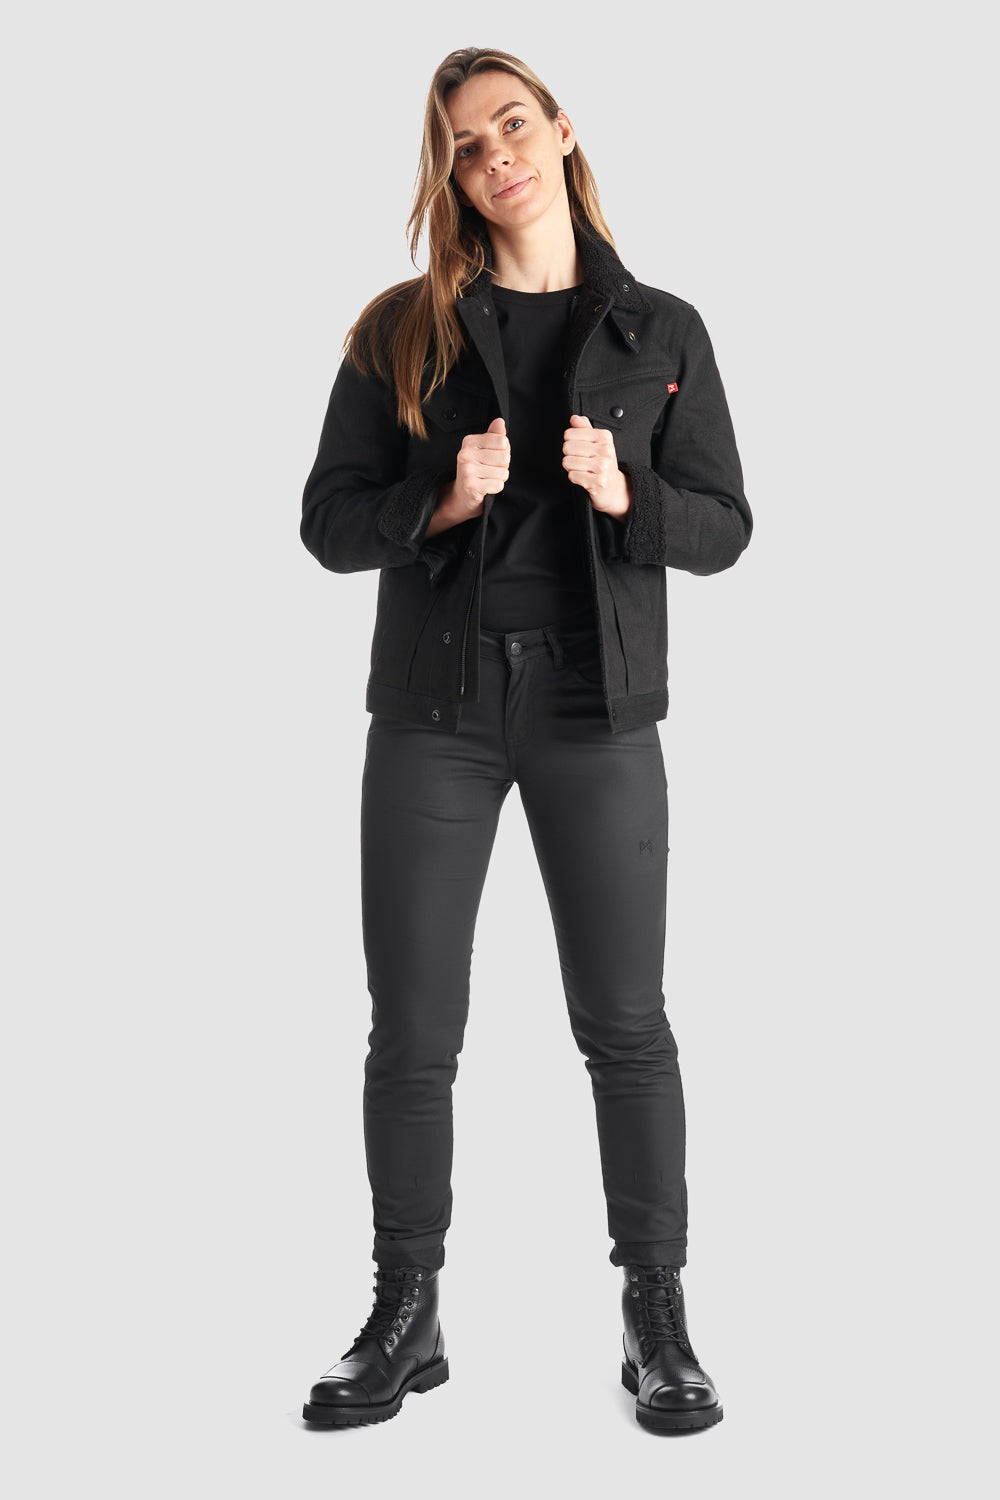 Pando Moto Lorica SLIM Women's Jeans, Length 30 - Black